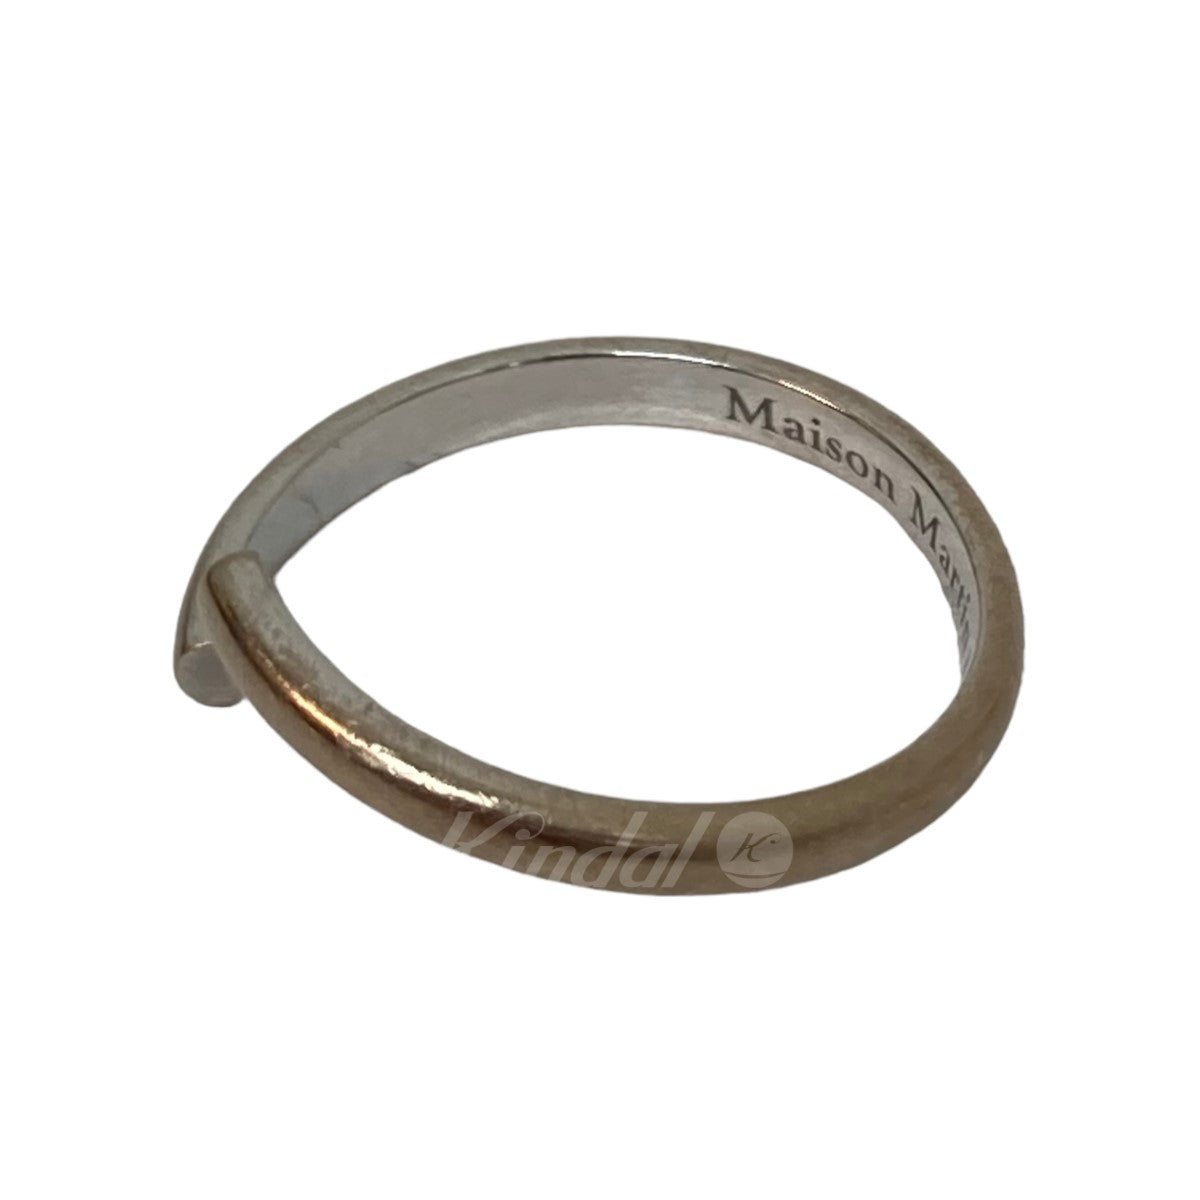 Maison Margiela(メゾン マルジェラ) Split Alliance Ring 18K White Gold